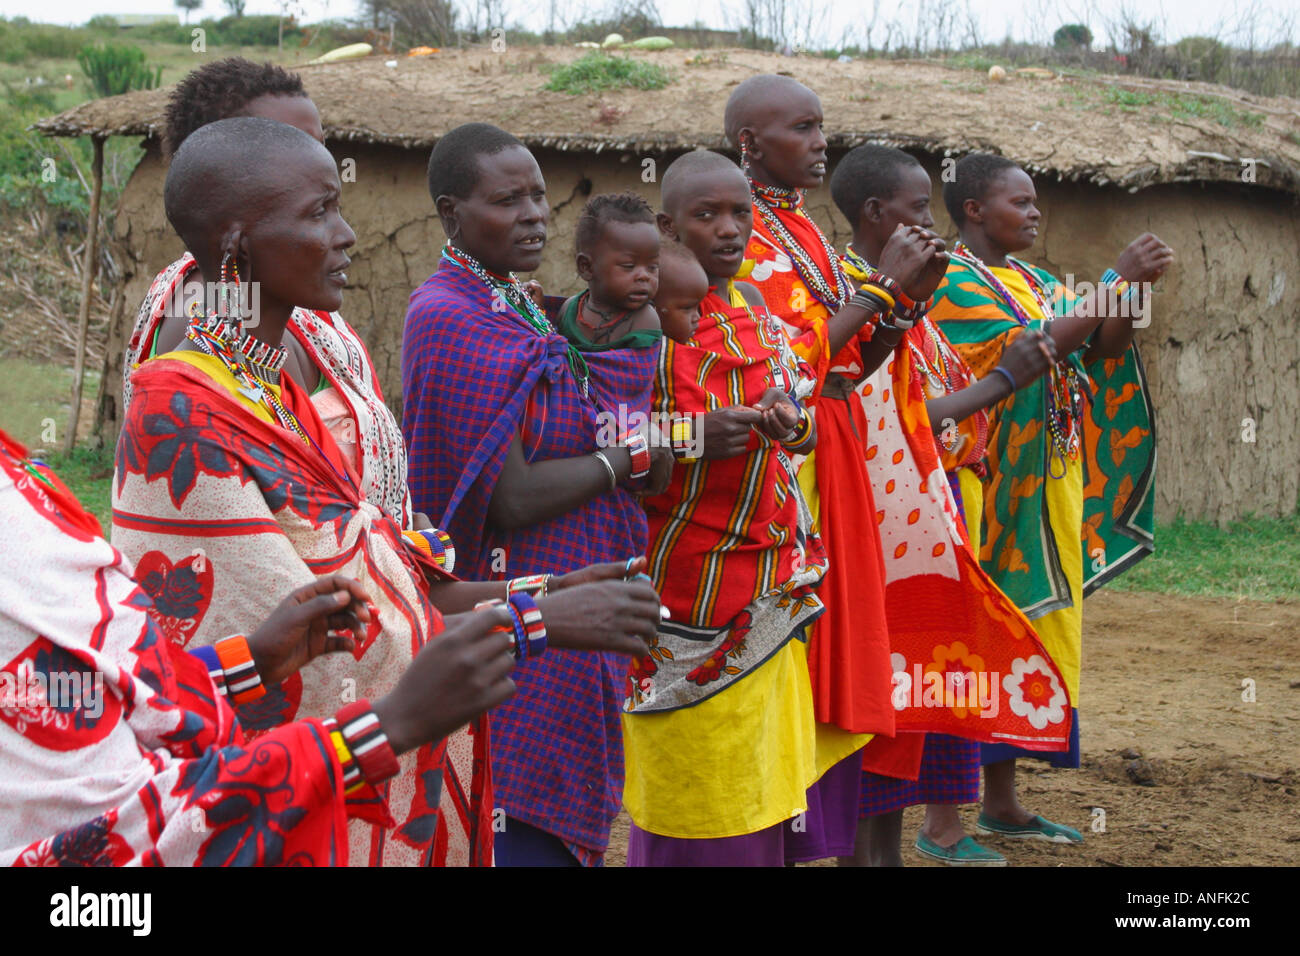 Maasai women in traditional dress perform welcome dance and sing in village Masai Mara Kenya East Africa Stock Photo